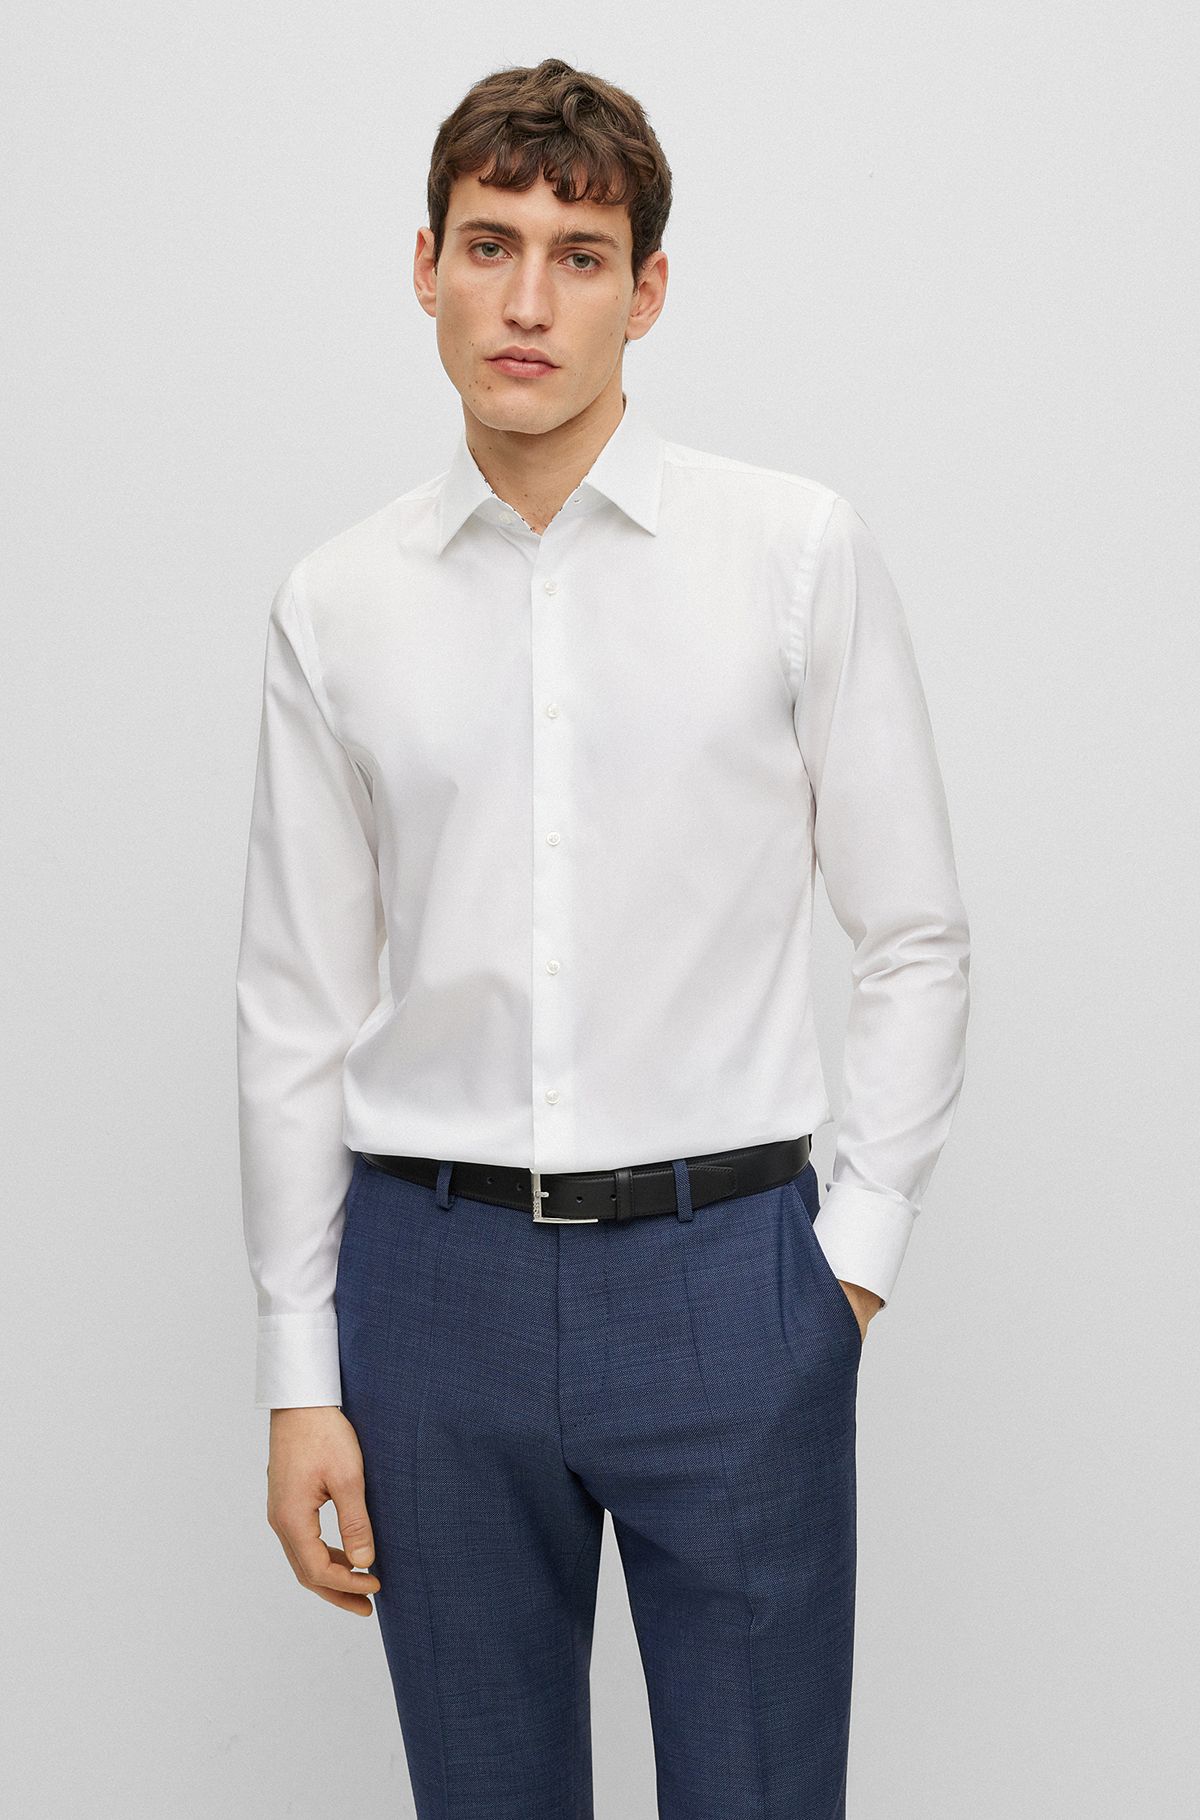 - in Slim-fit BOSS easy-iron cotton shirt poplin